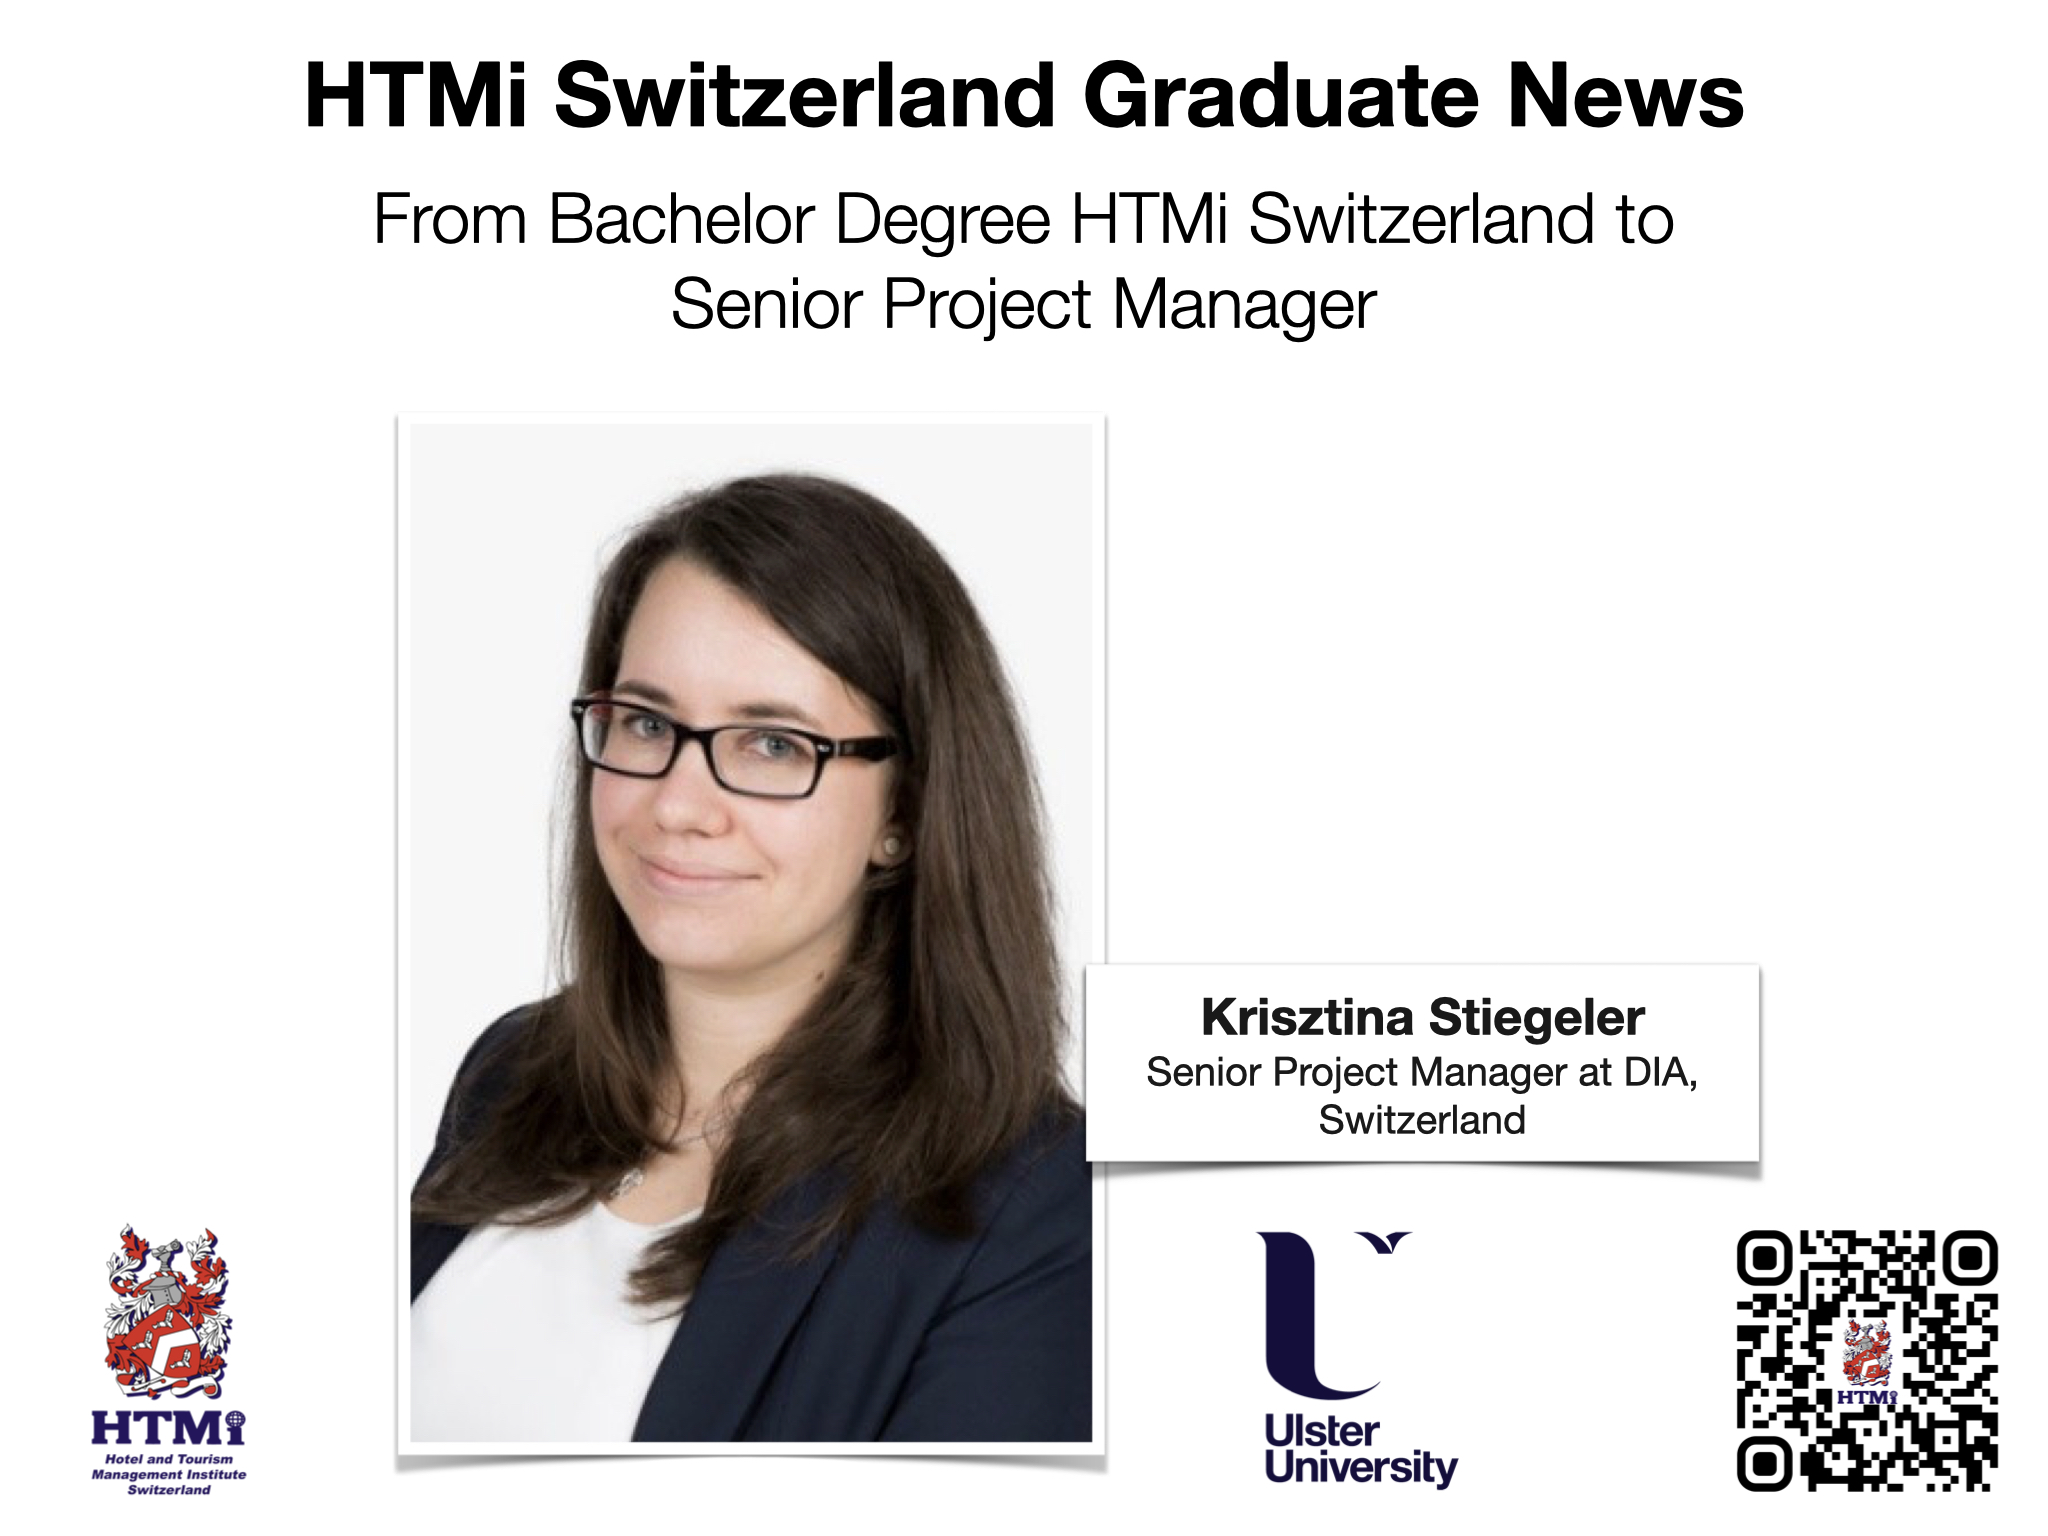 Krisztina Stiegeler - From Bachelor Degree HTMi Switzerland to Senior Project Manager